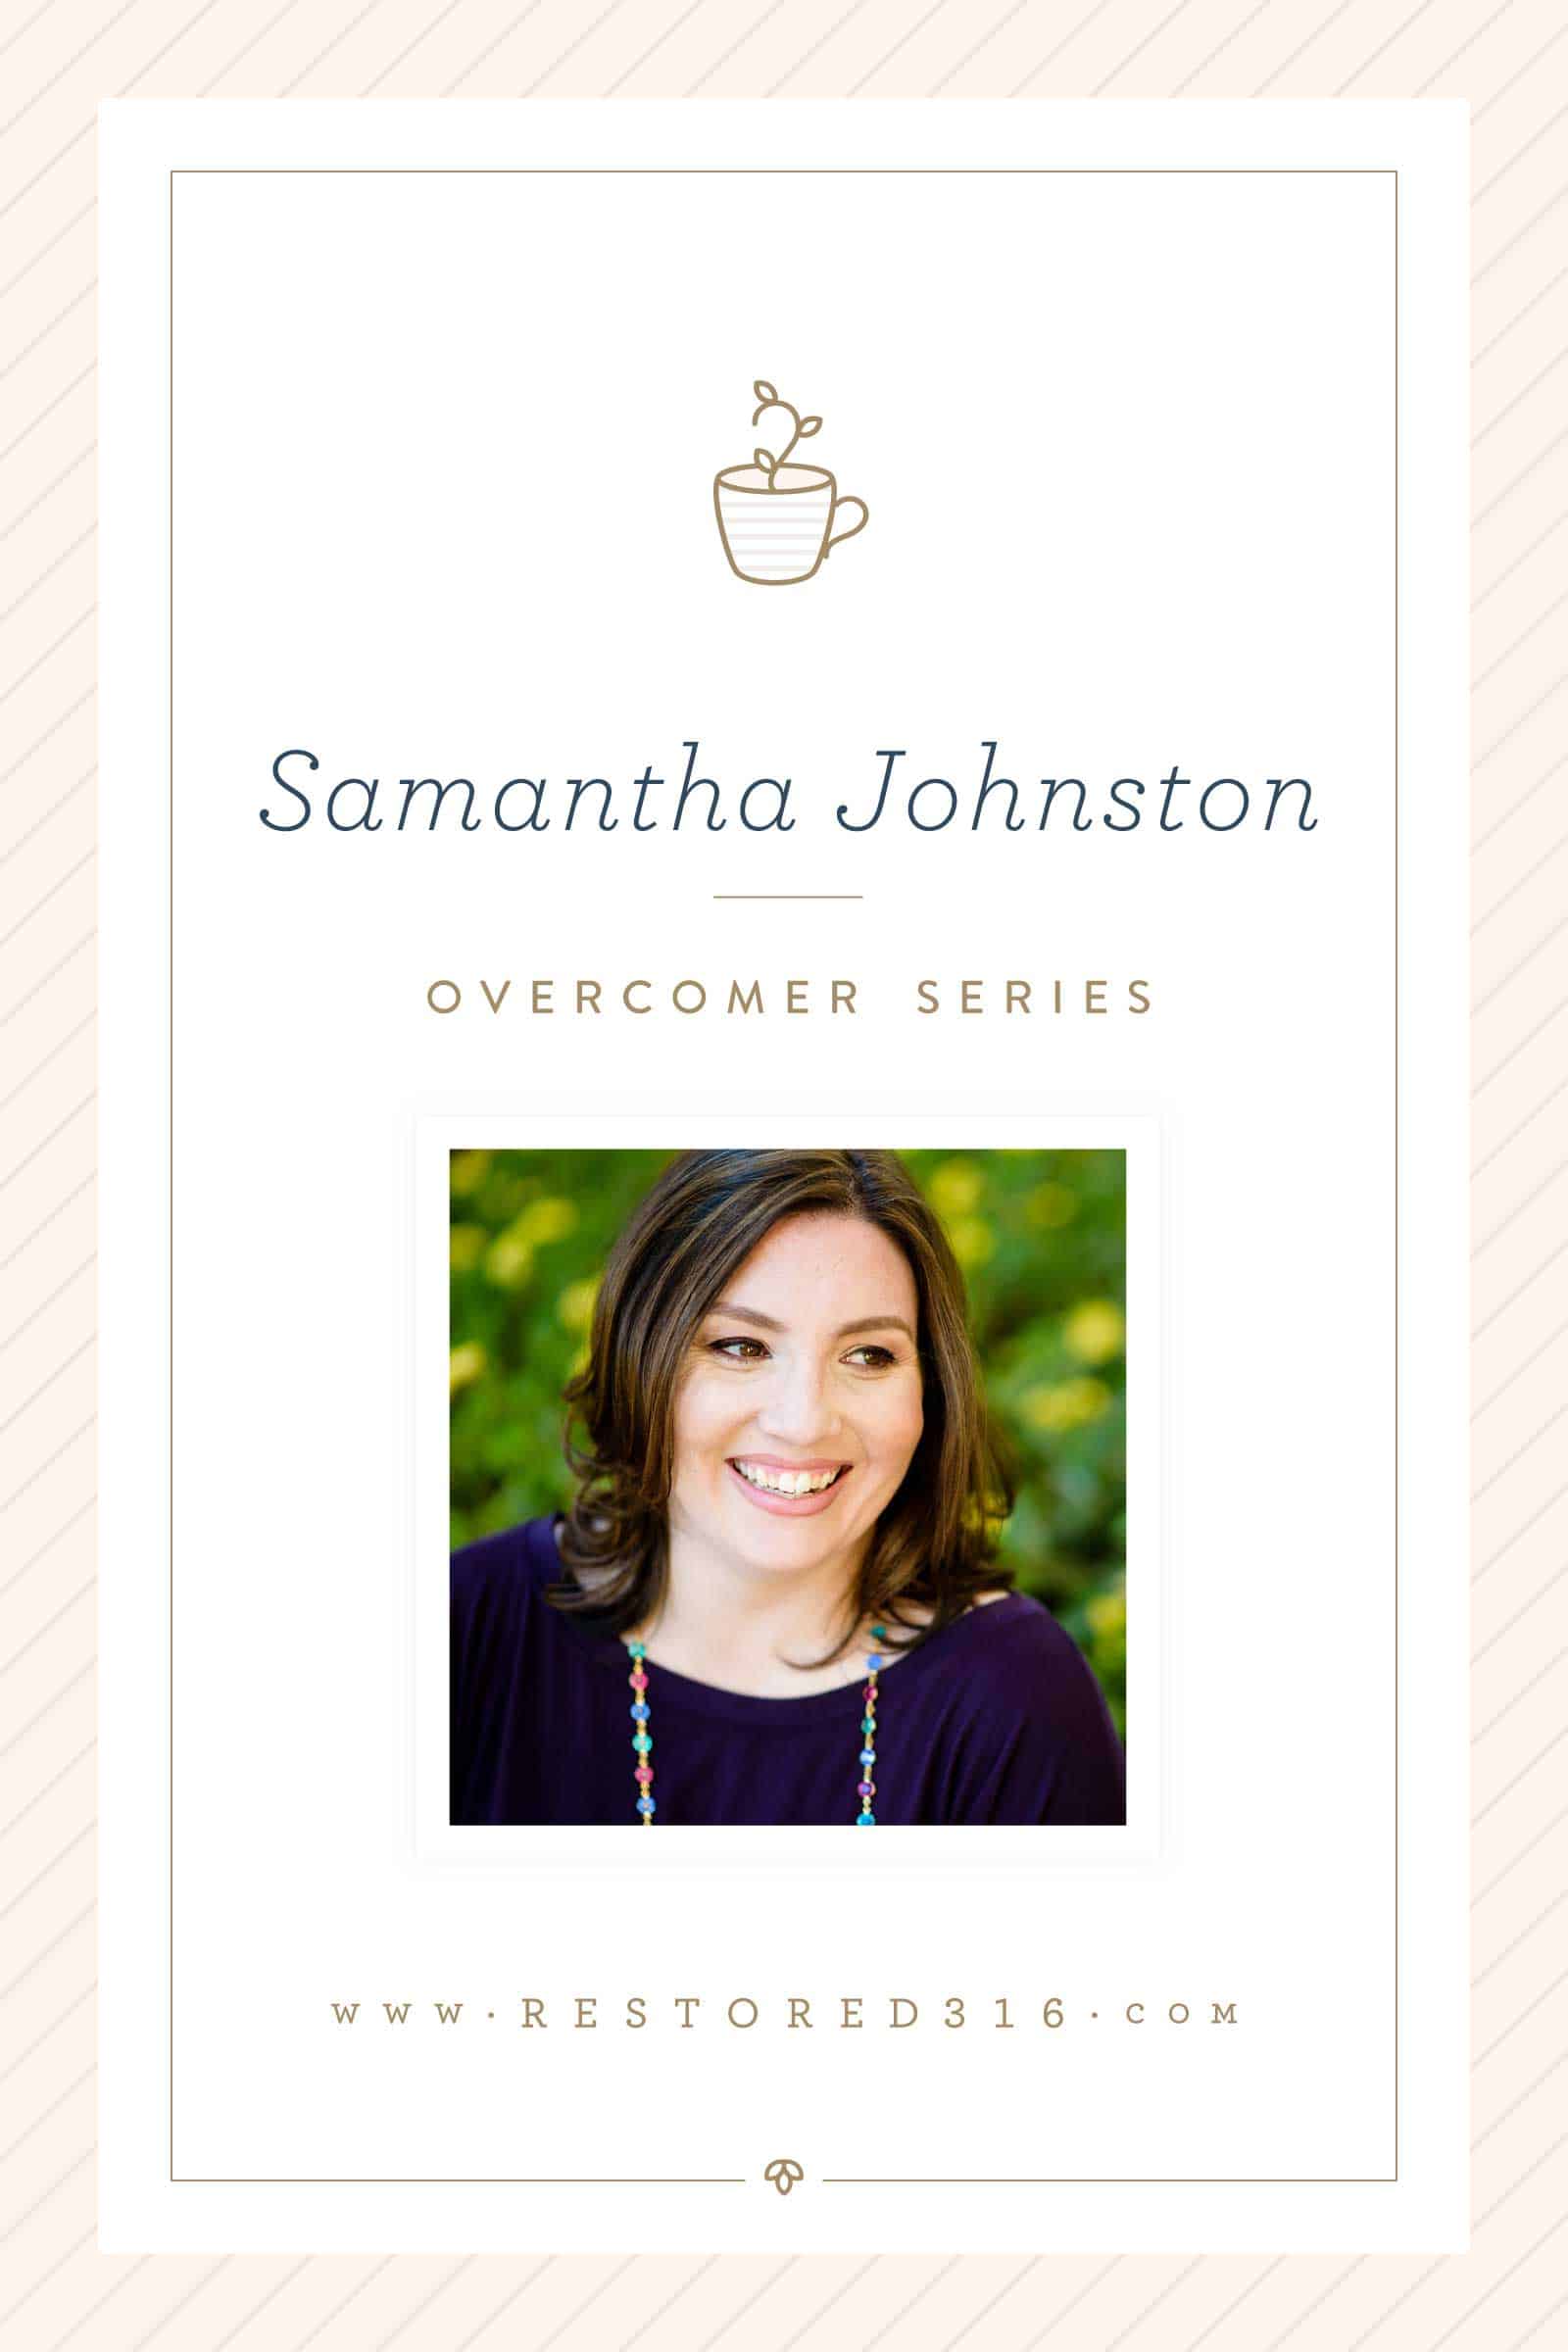 Overcomer Series with Samantha Johnston